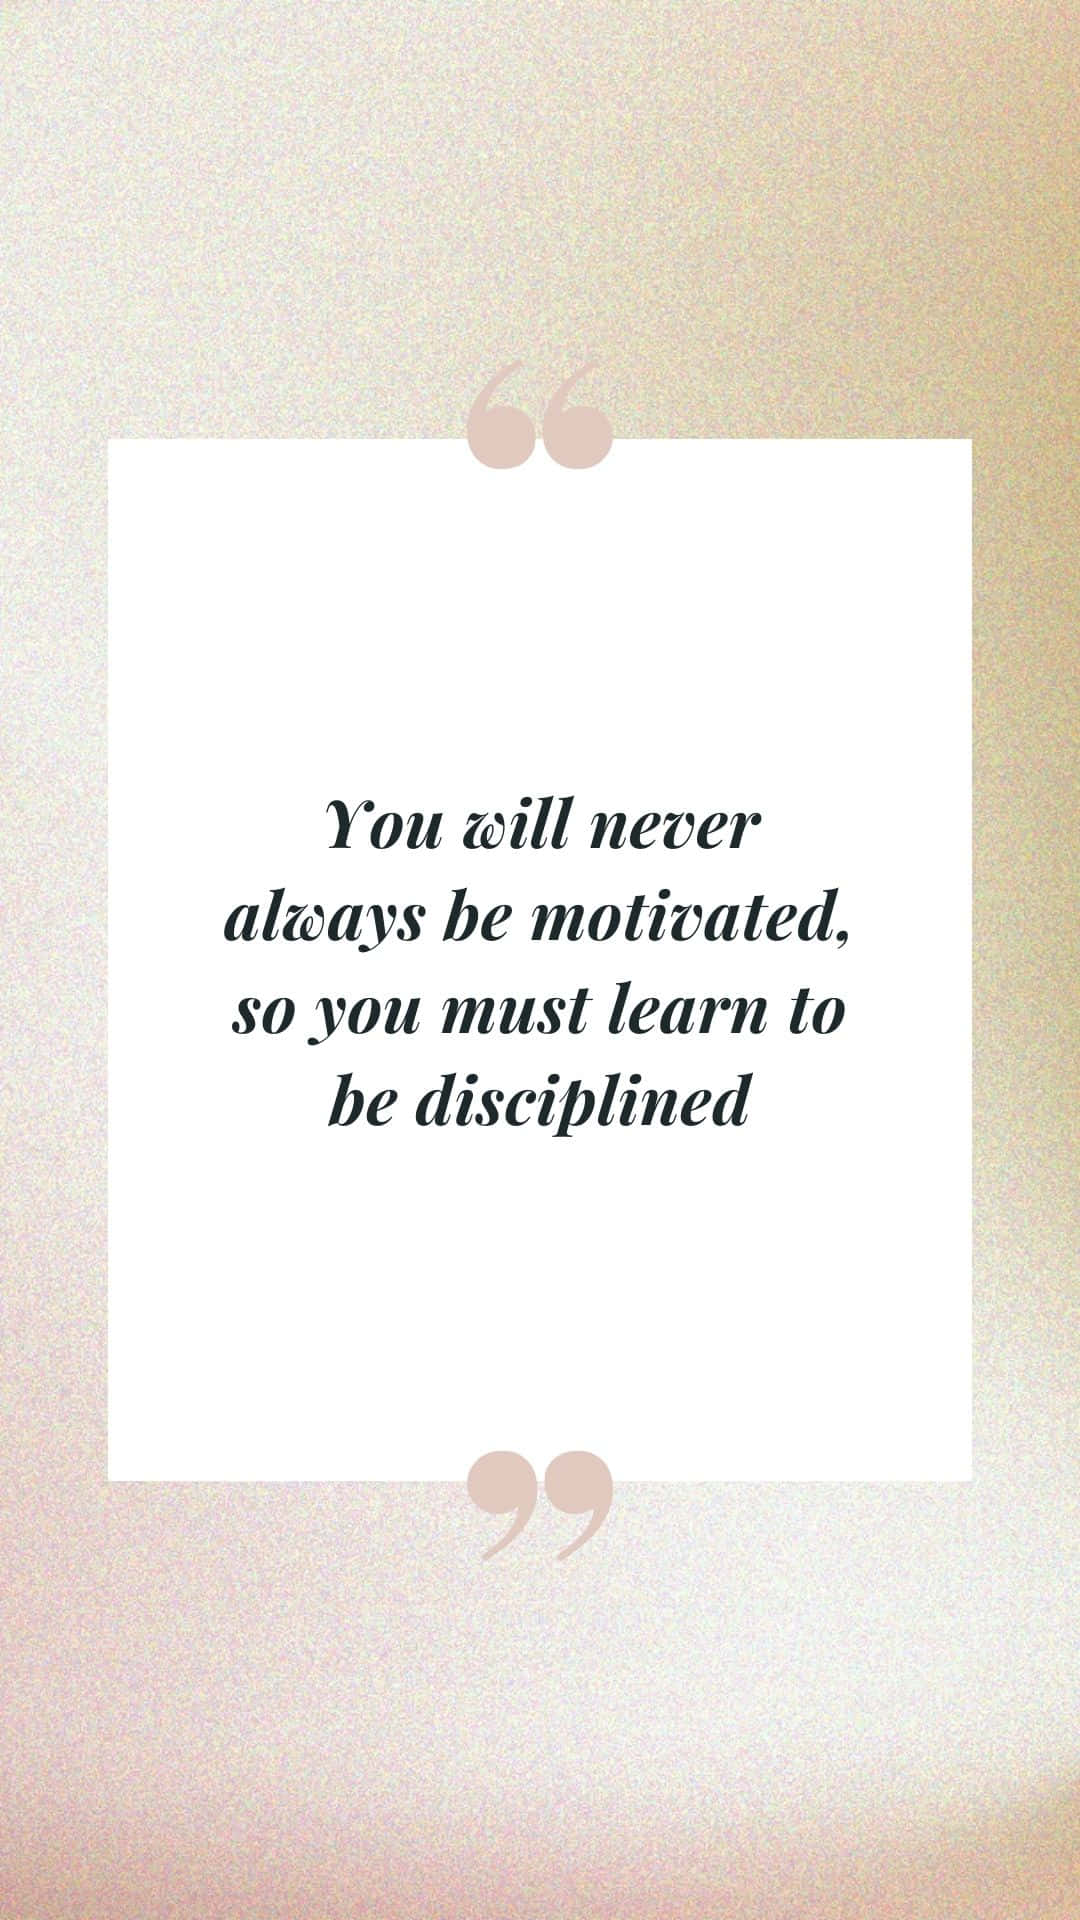 Motivationand Discipline Quote Wallpaper